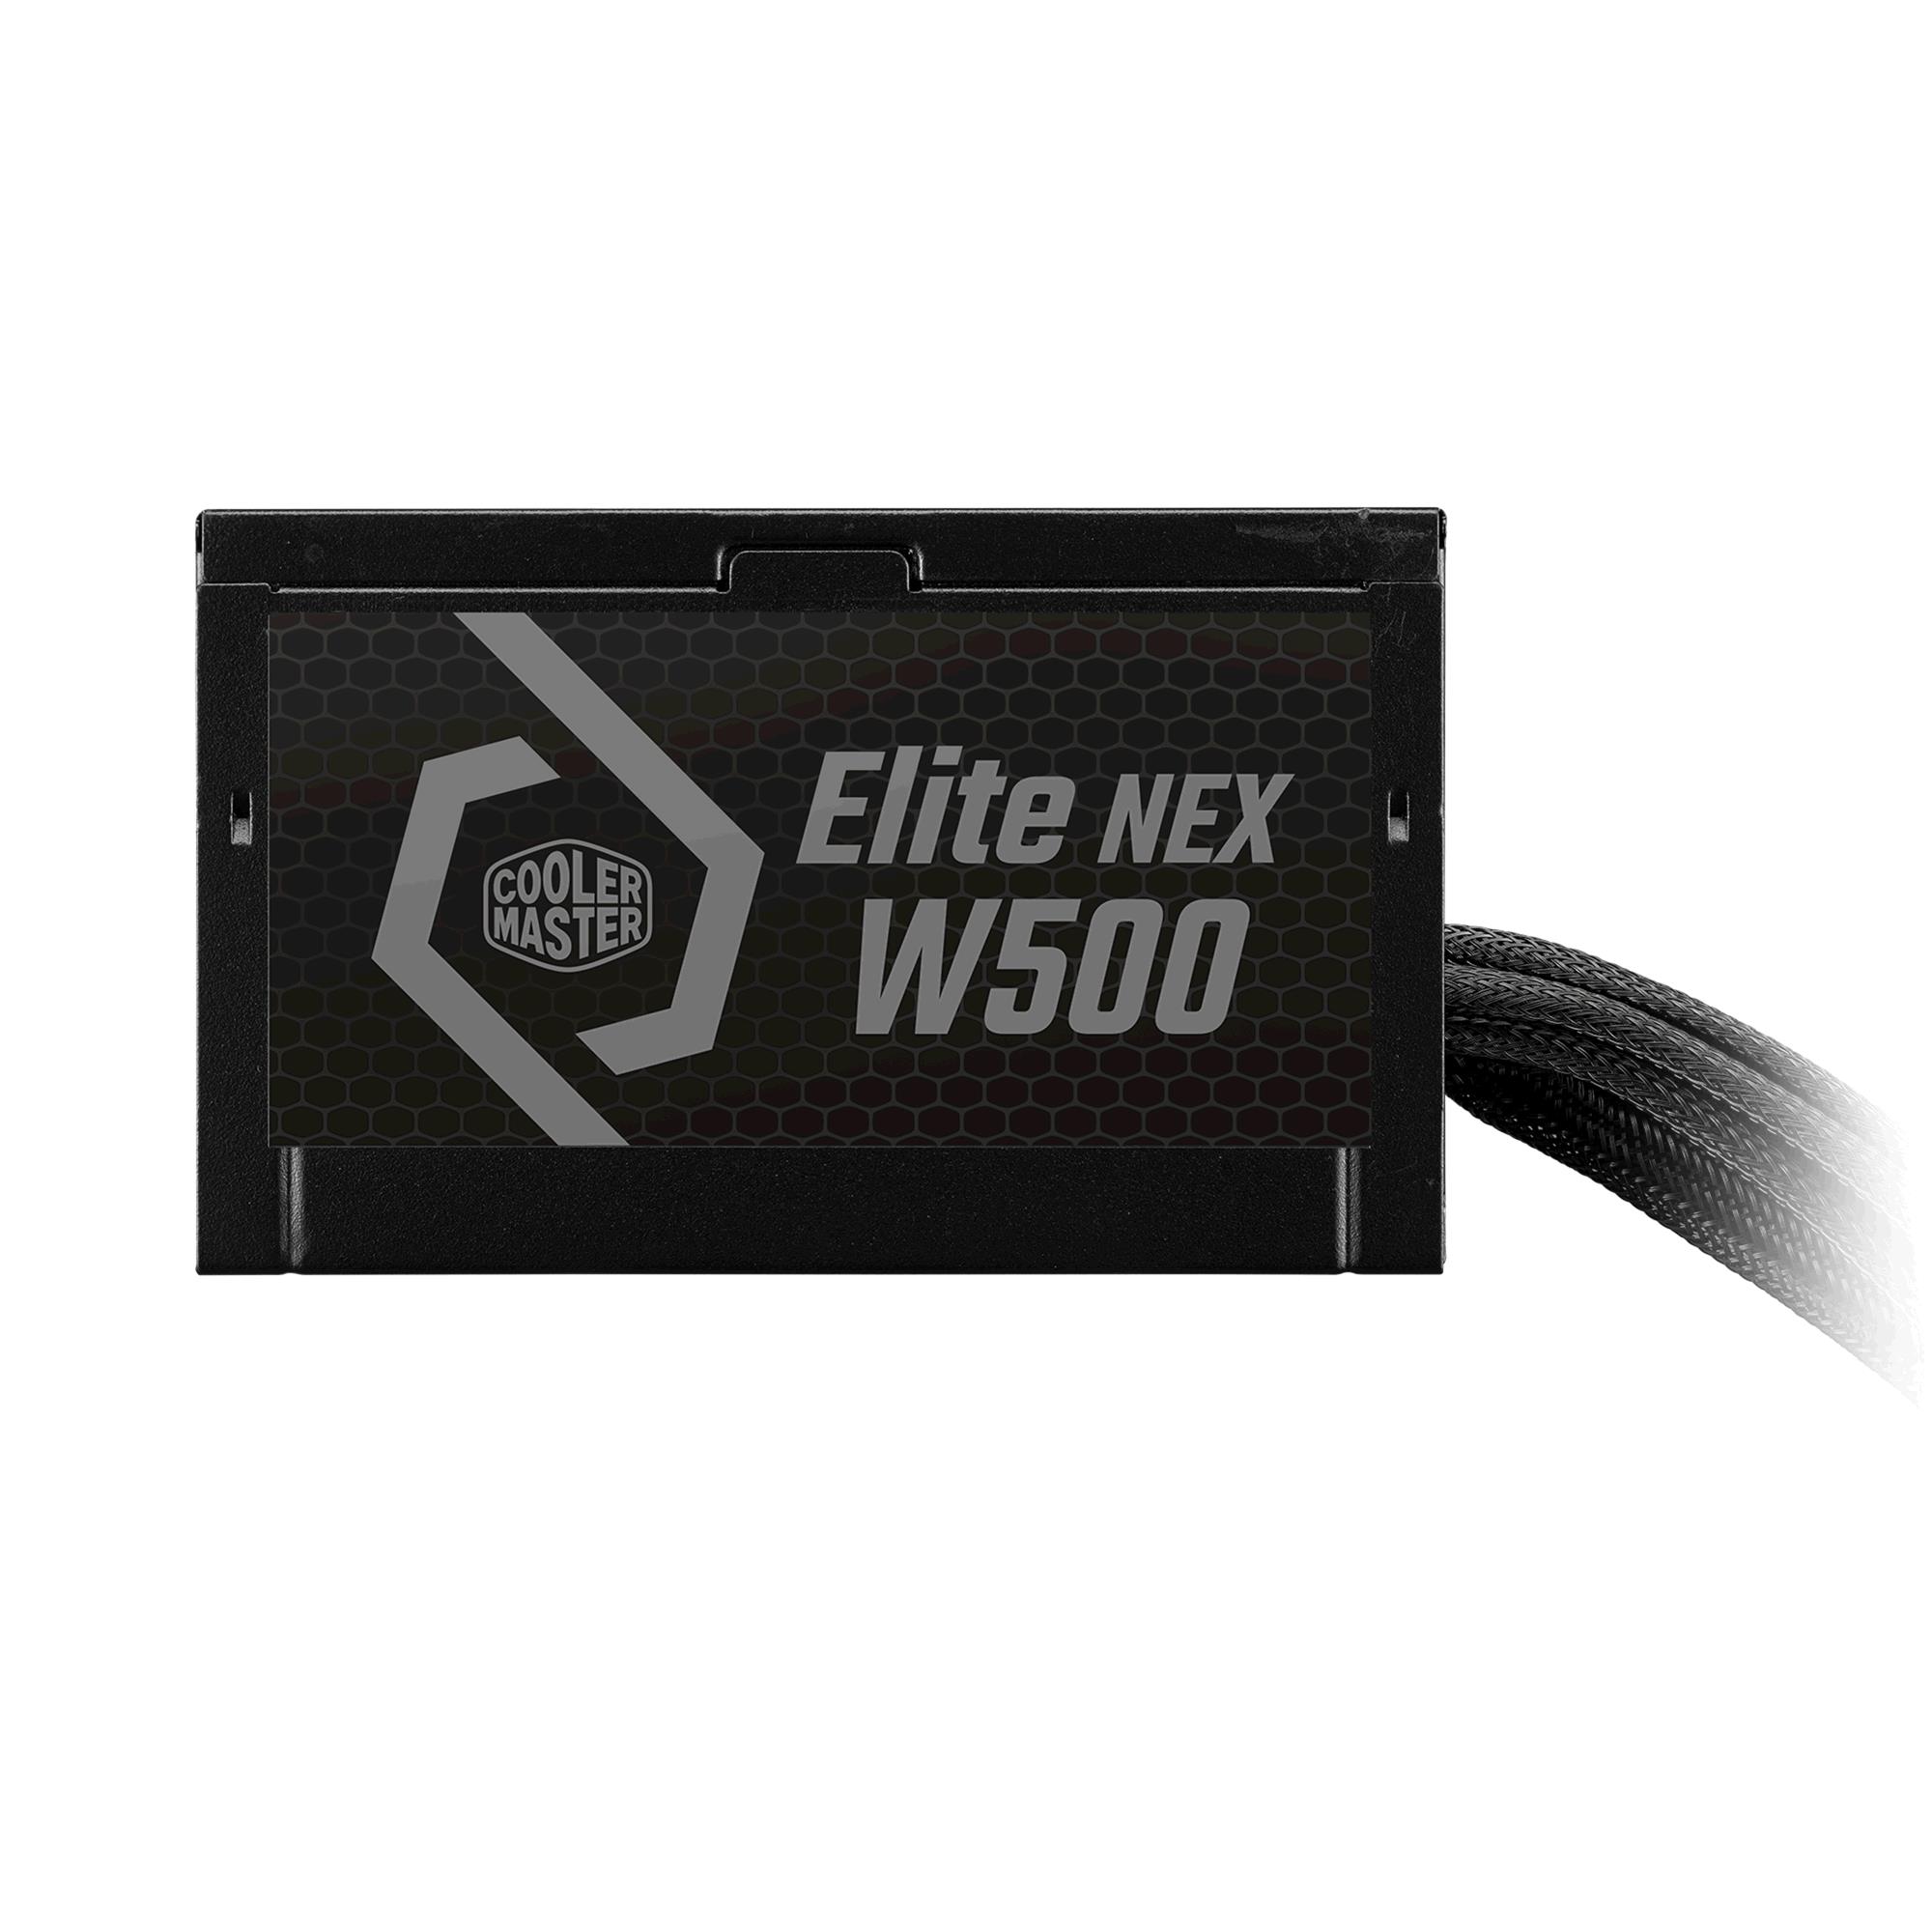 Cooler Master Elite Nex W500 Black